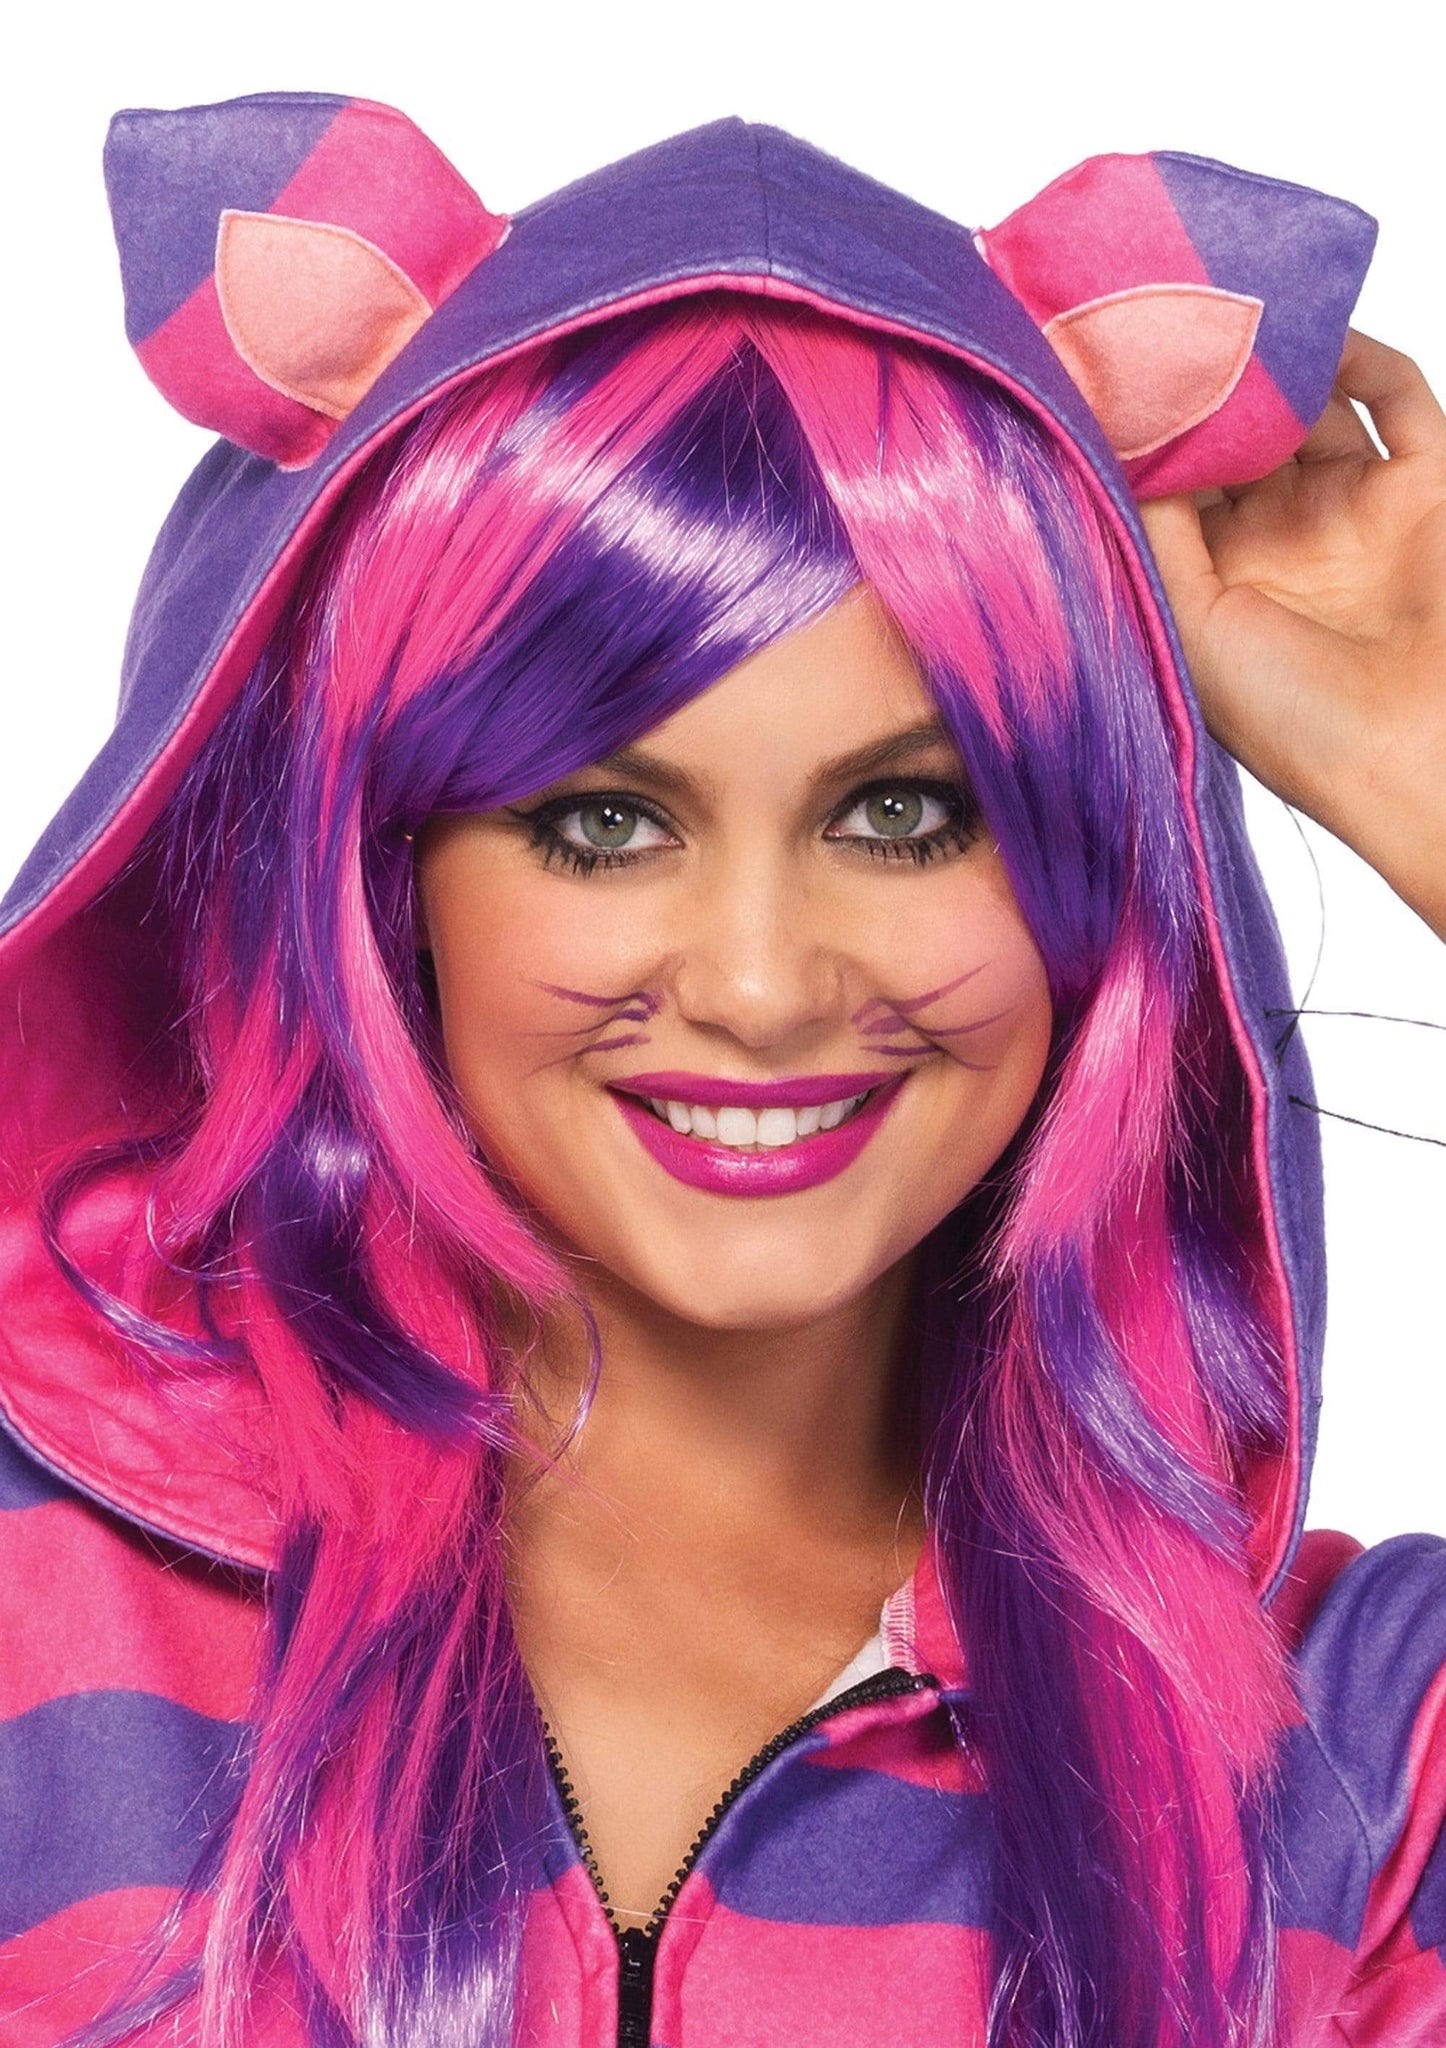 Cozy Cheshire Cat Costume | Adult